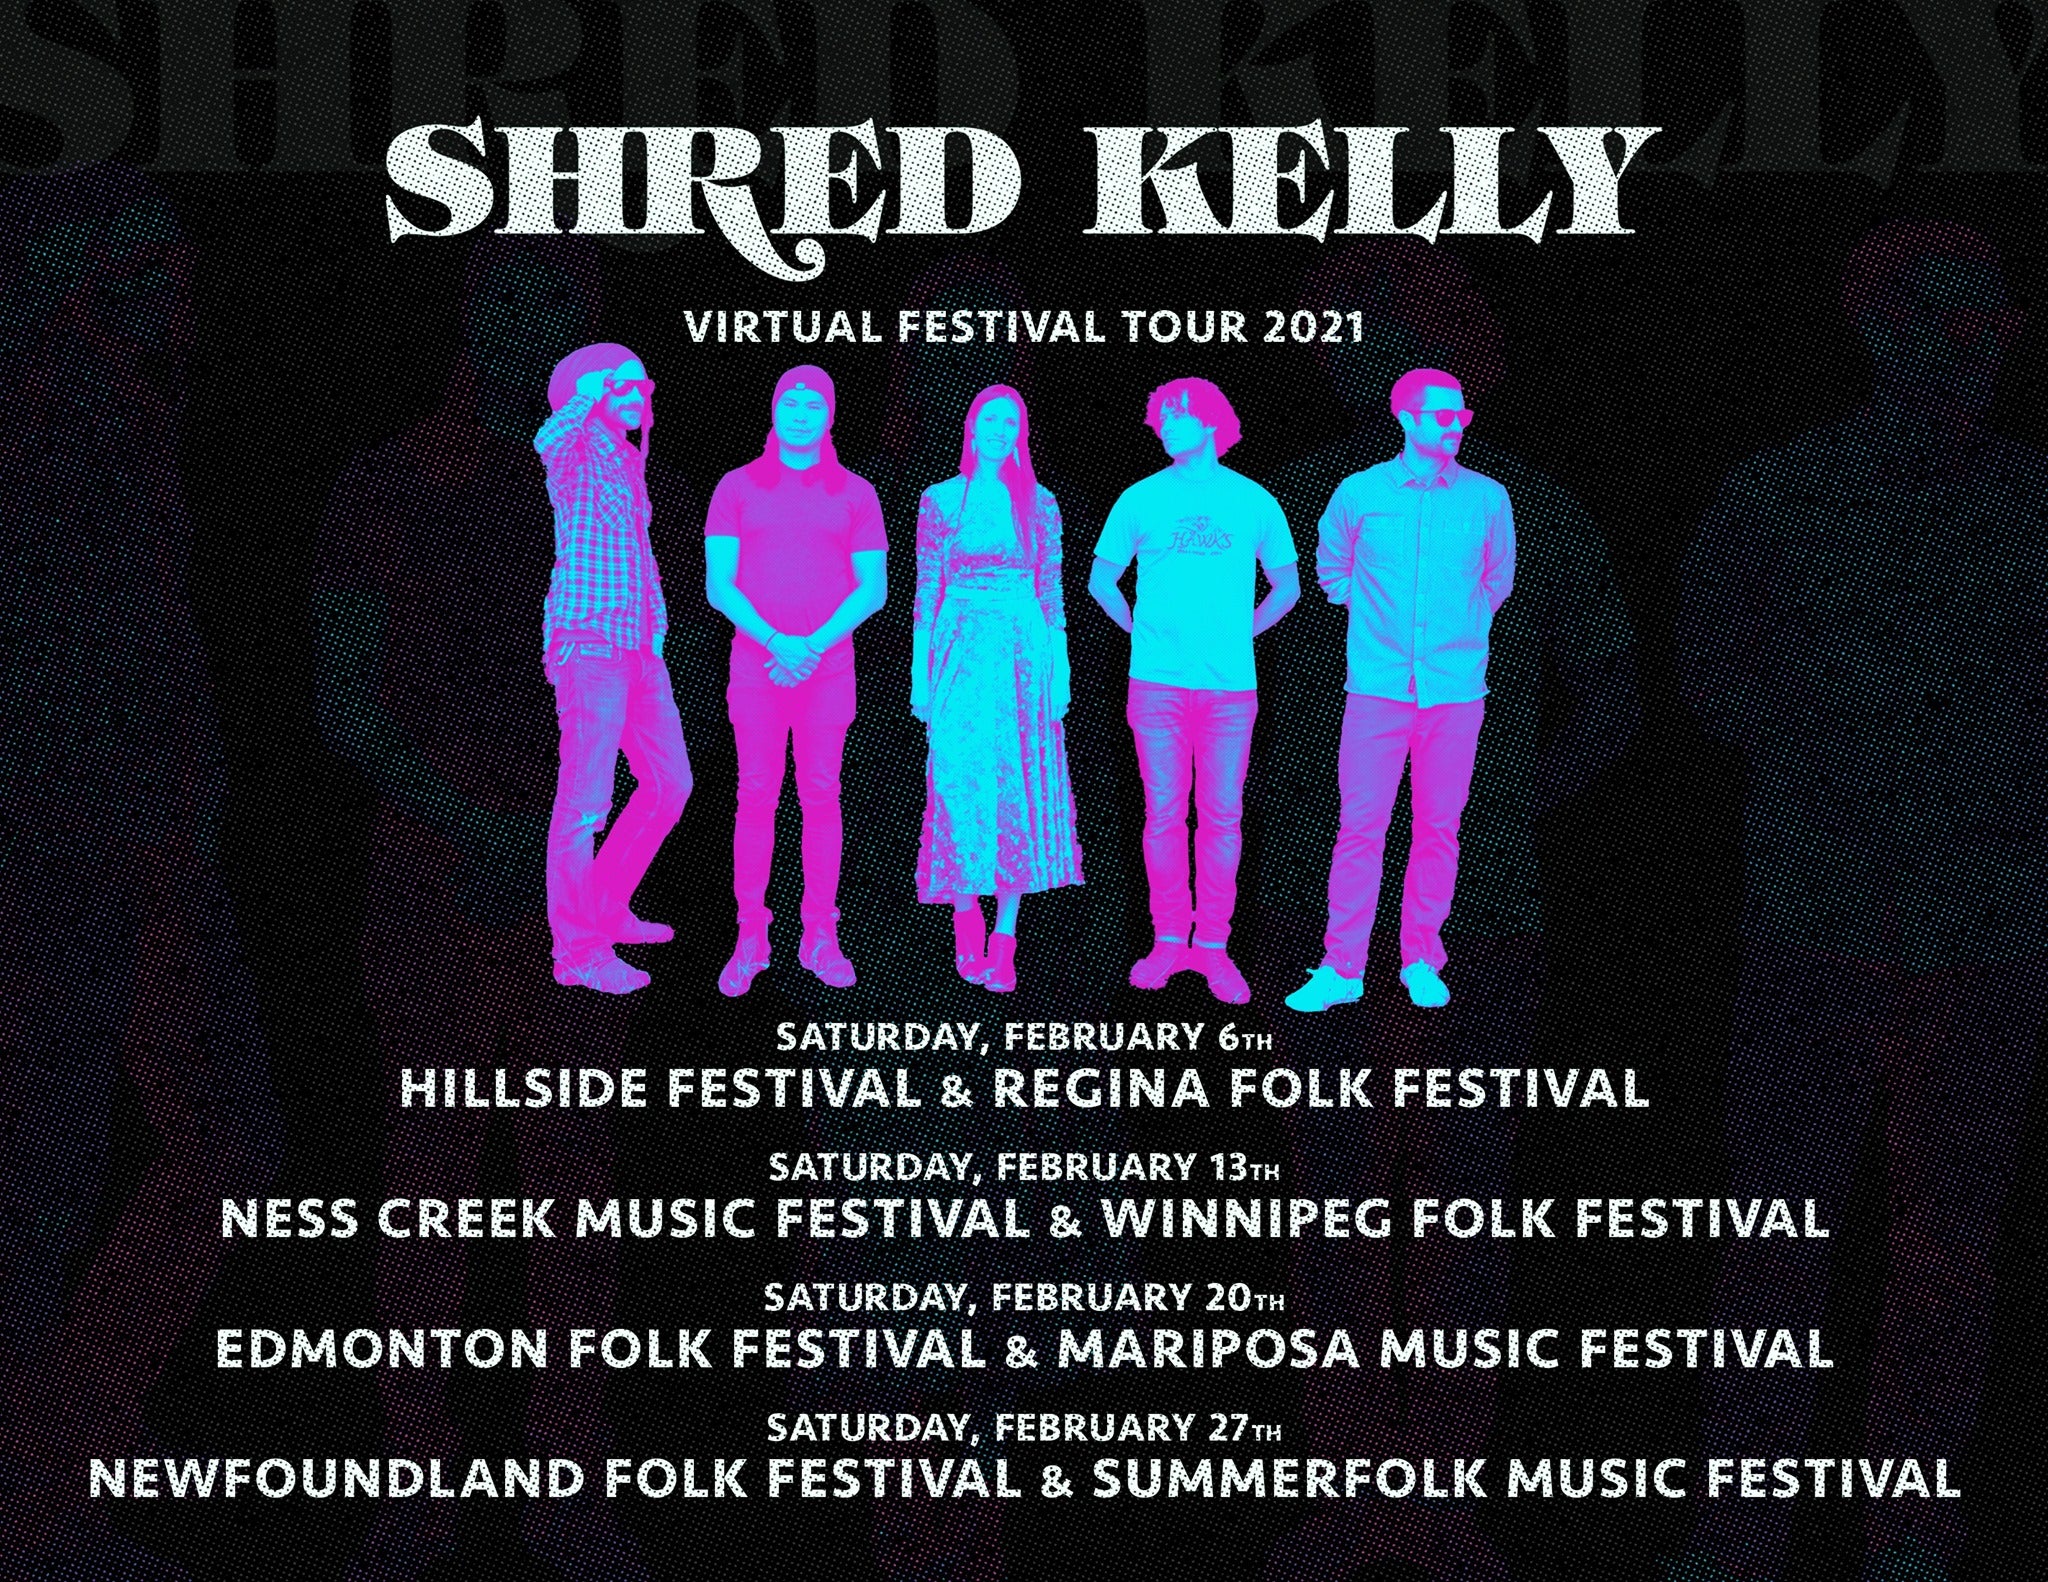 Shred Kelly Announce Virtual Festival Tour